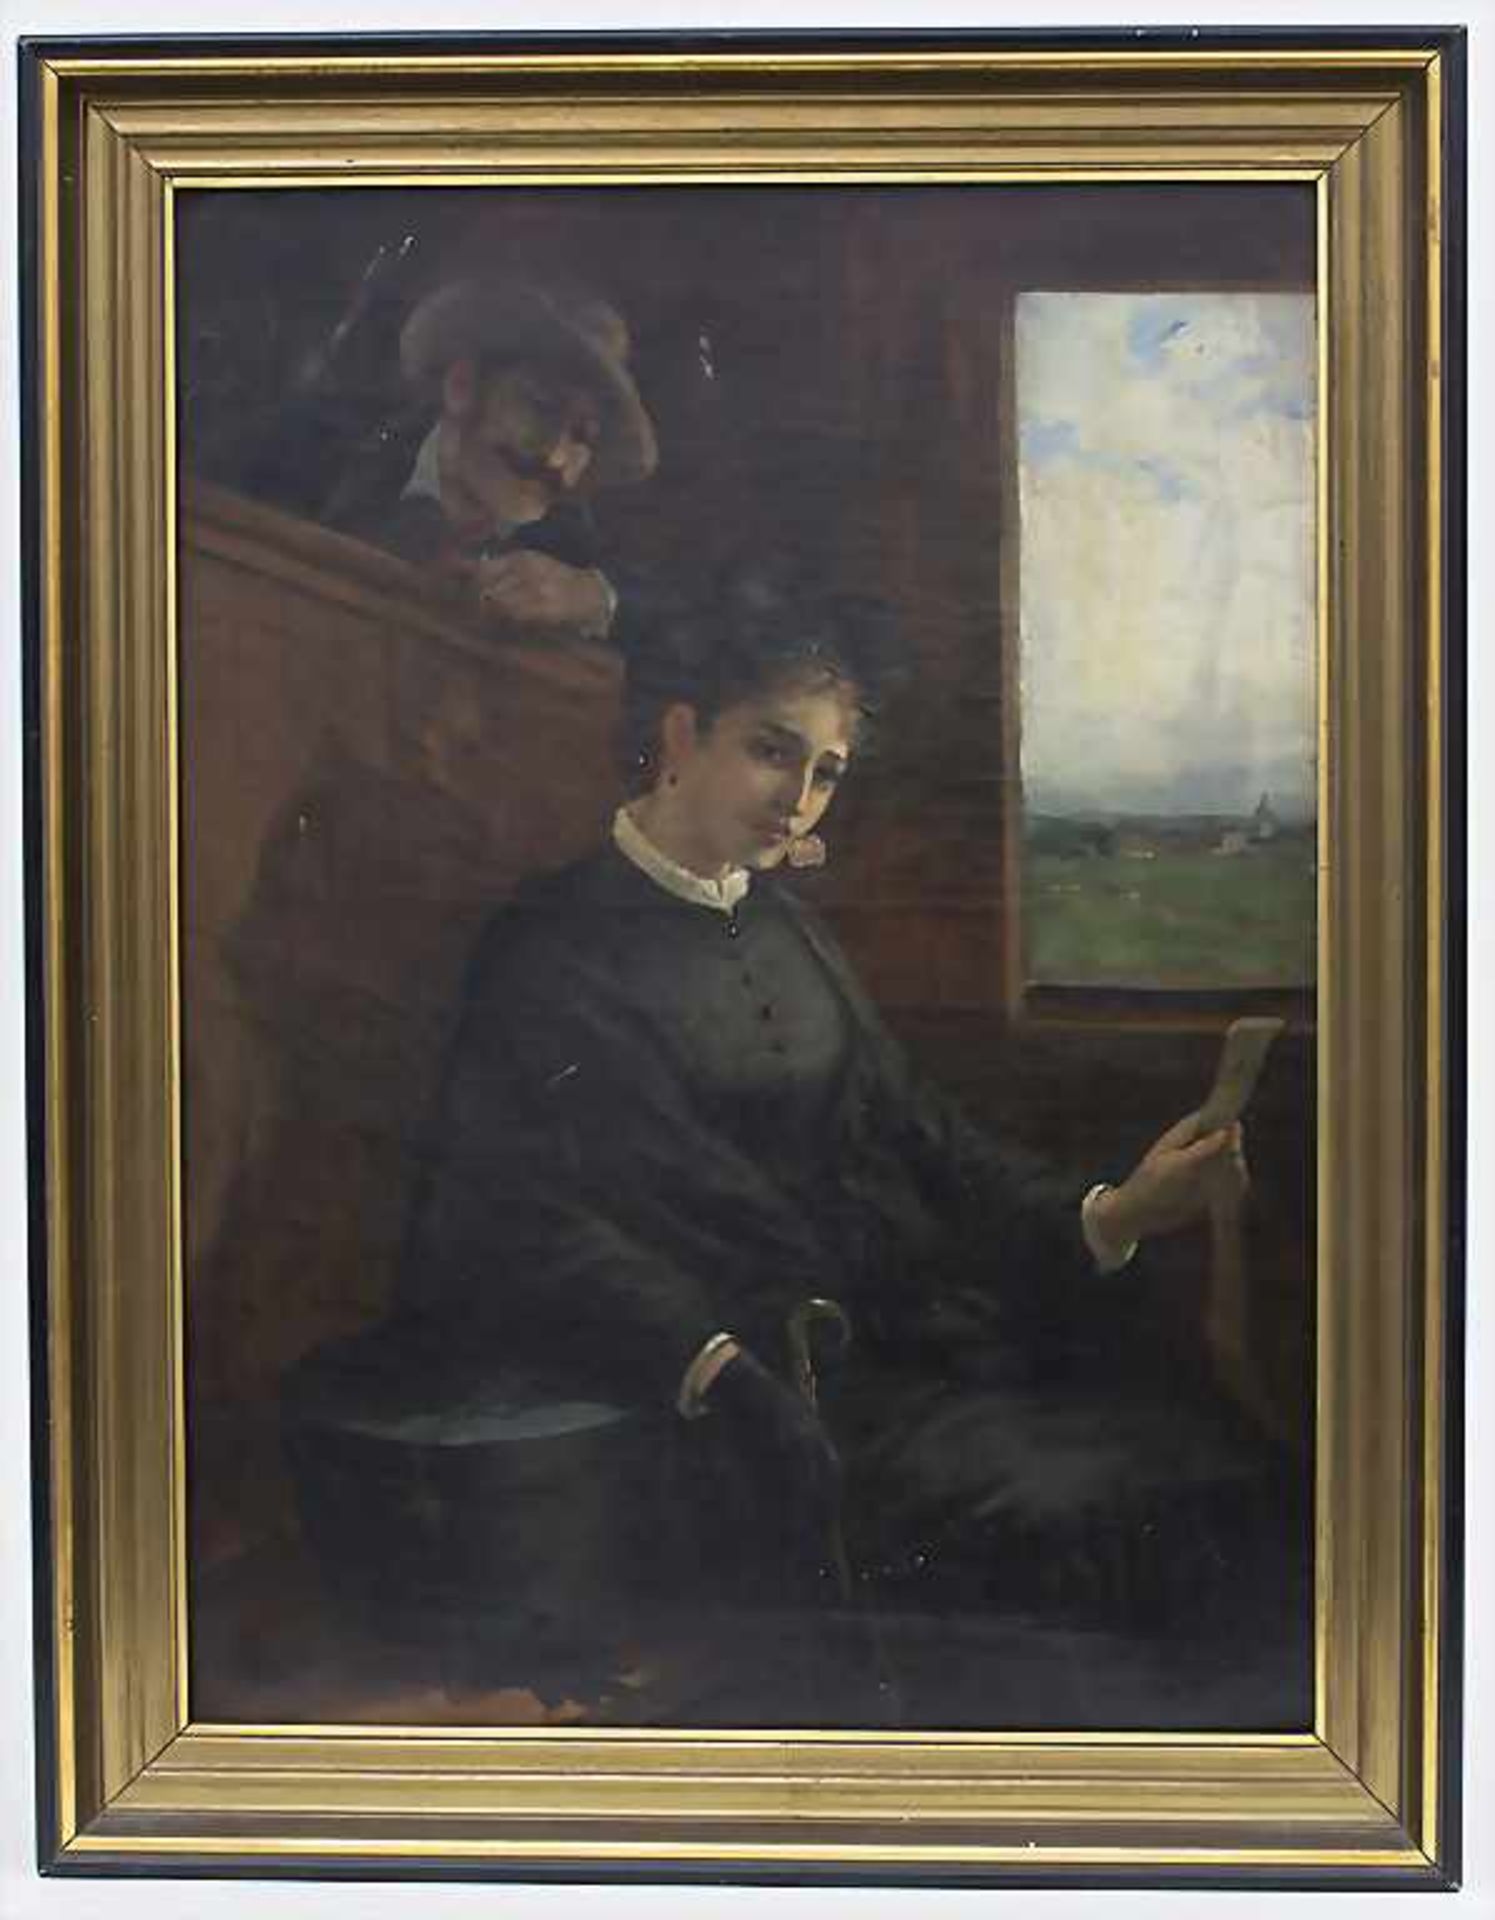 Joseph Emmanuel van den Bussche (1837-1908), 'Junge Dame im Zugabteil' / 'A young lady in a cabin' - Image 3 of 5